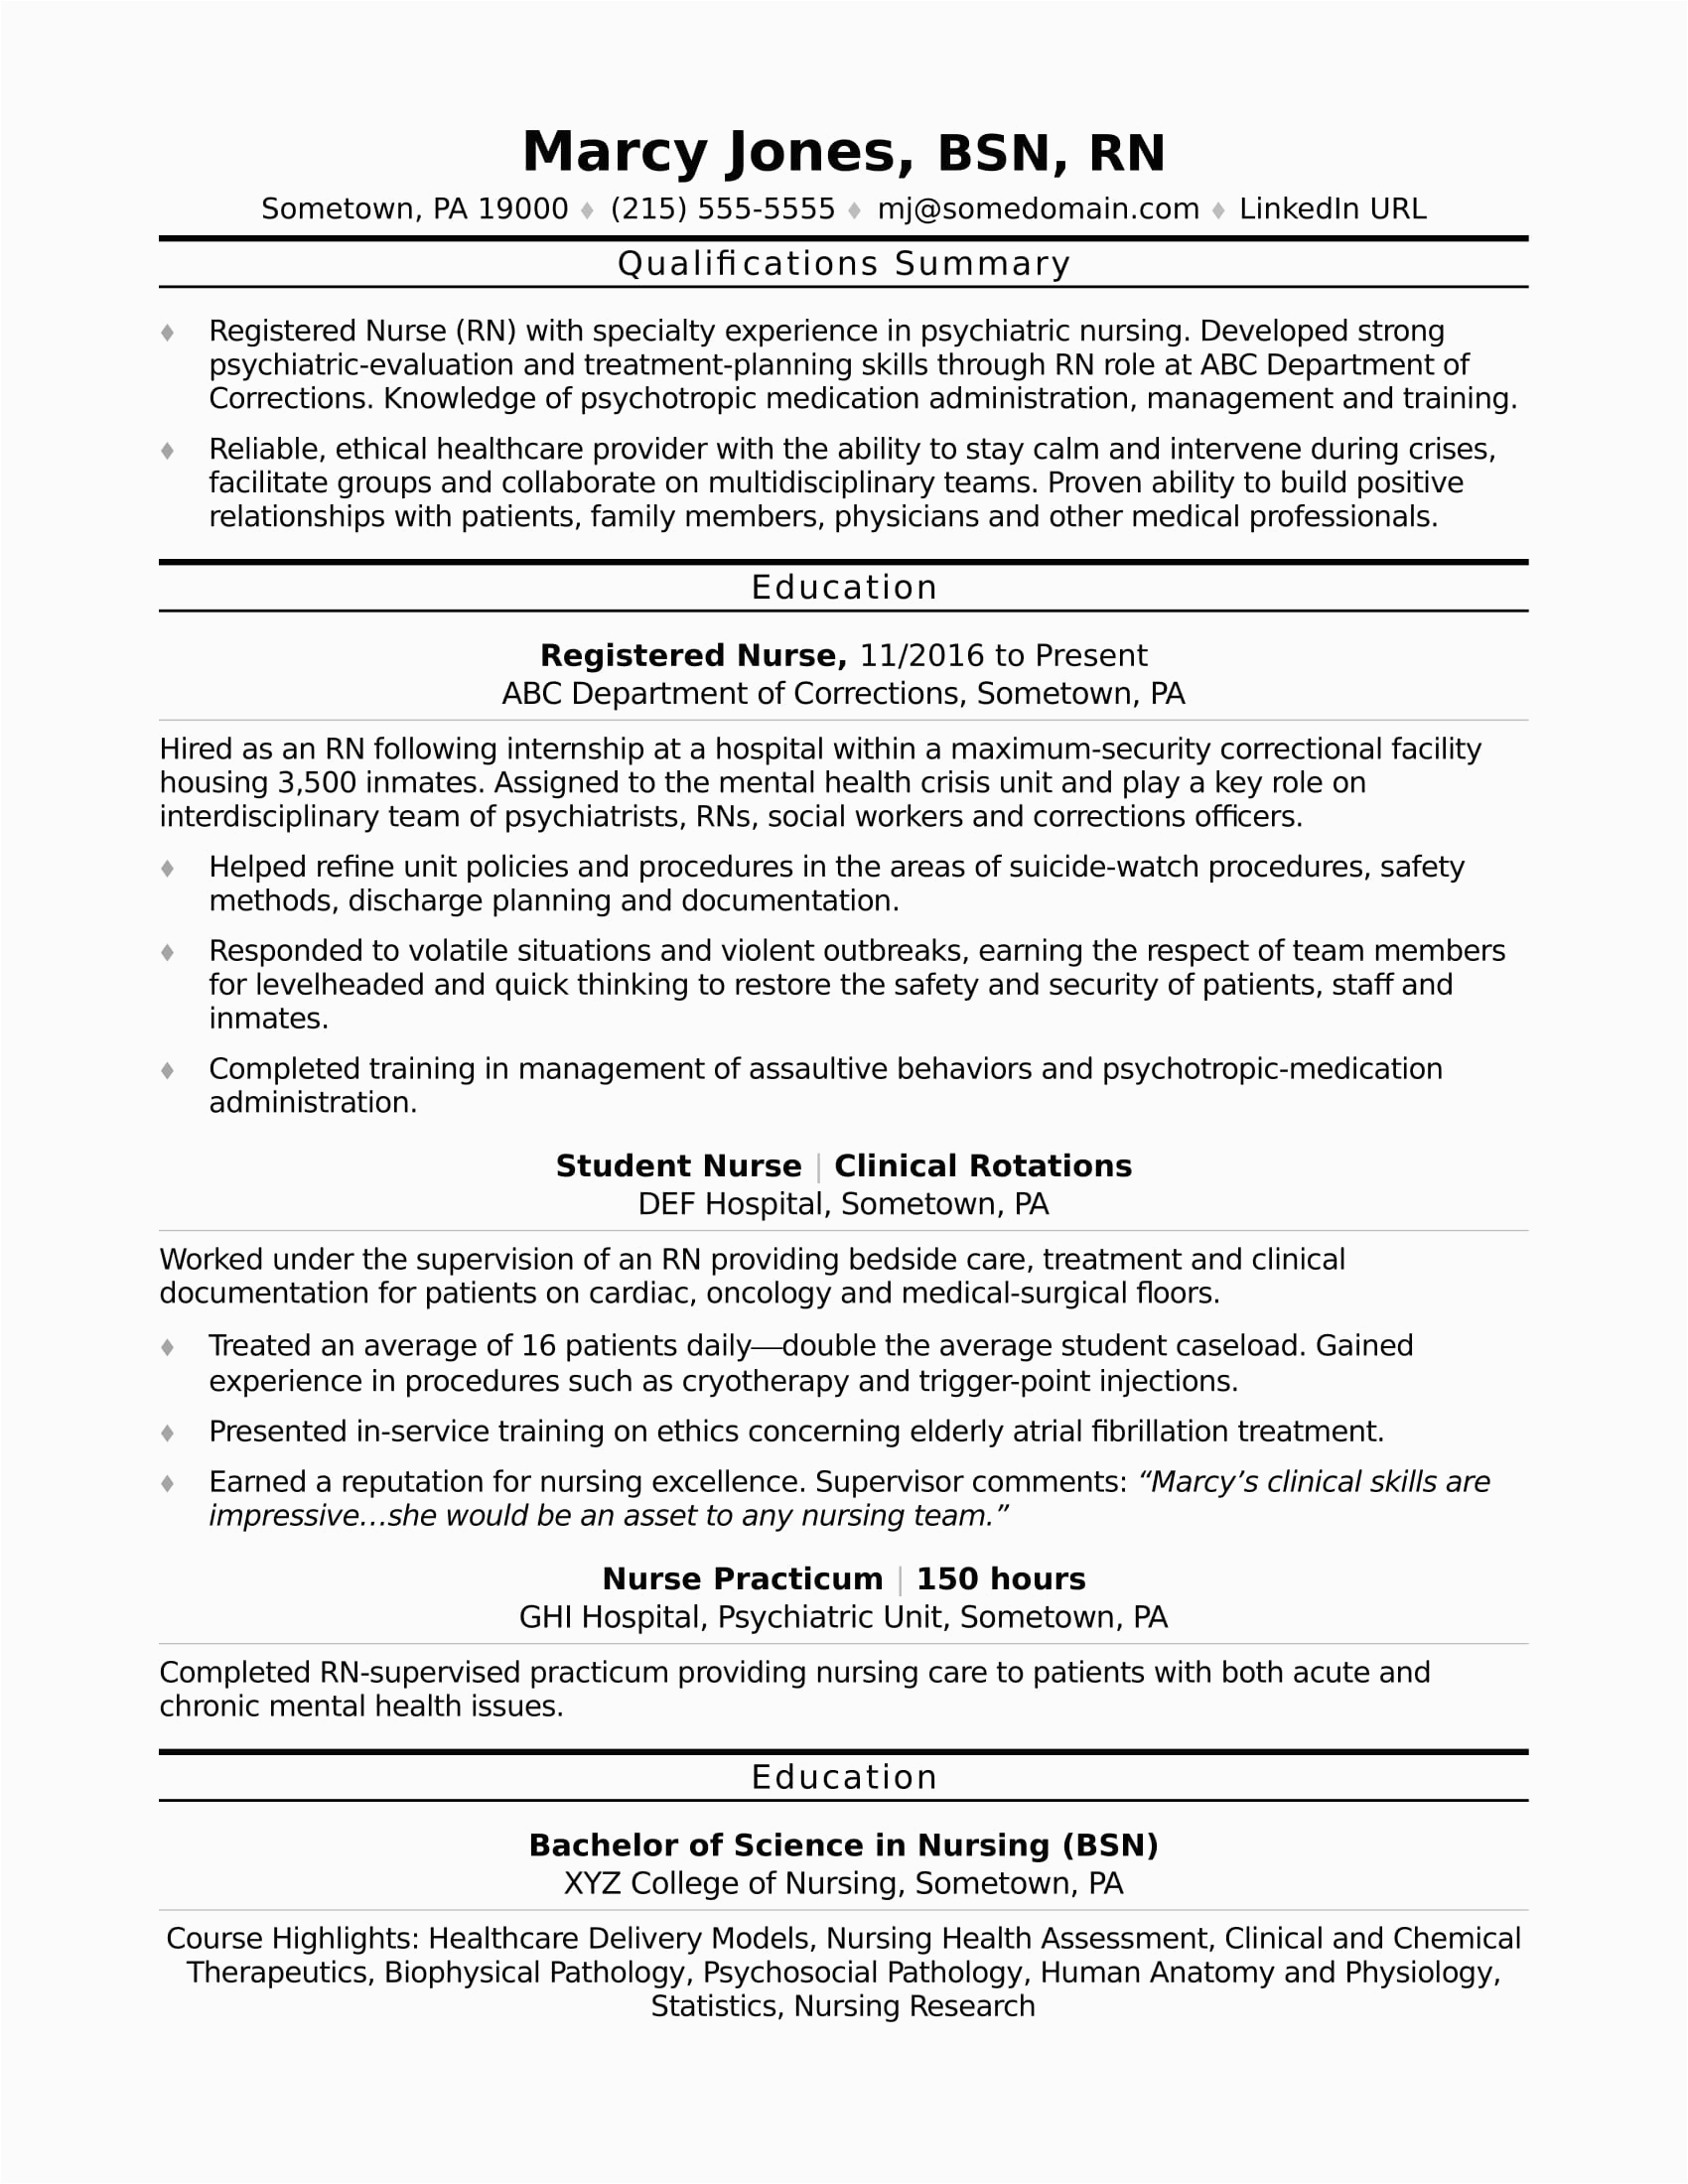 Sample Qualifications In Resume for Nurses Registered Nurse Rn Resume Sample